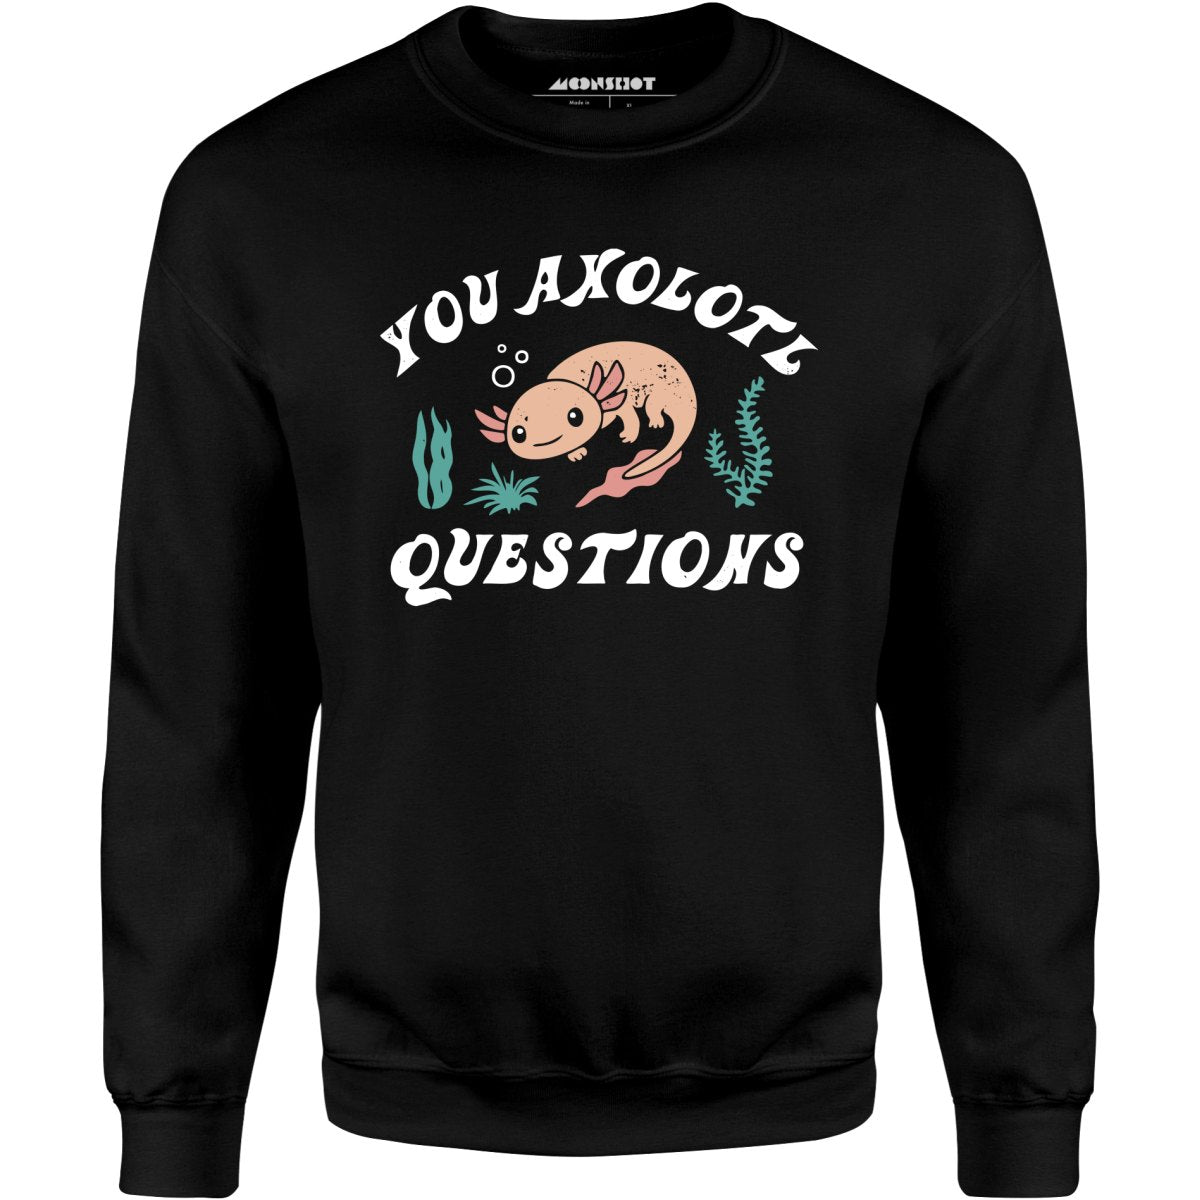 You Axolotl Questions - Unisex Sweatshirt